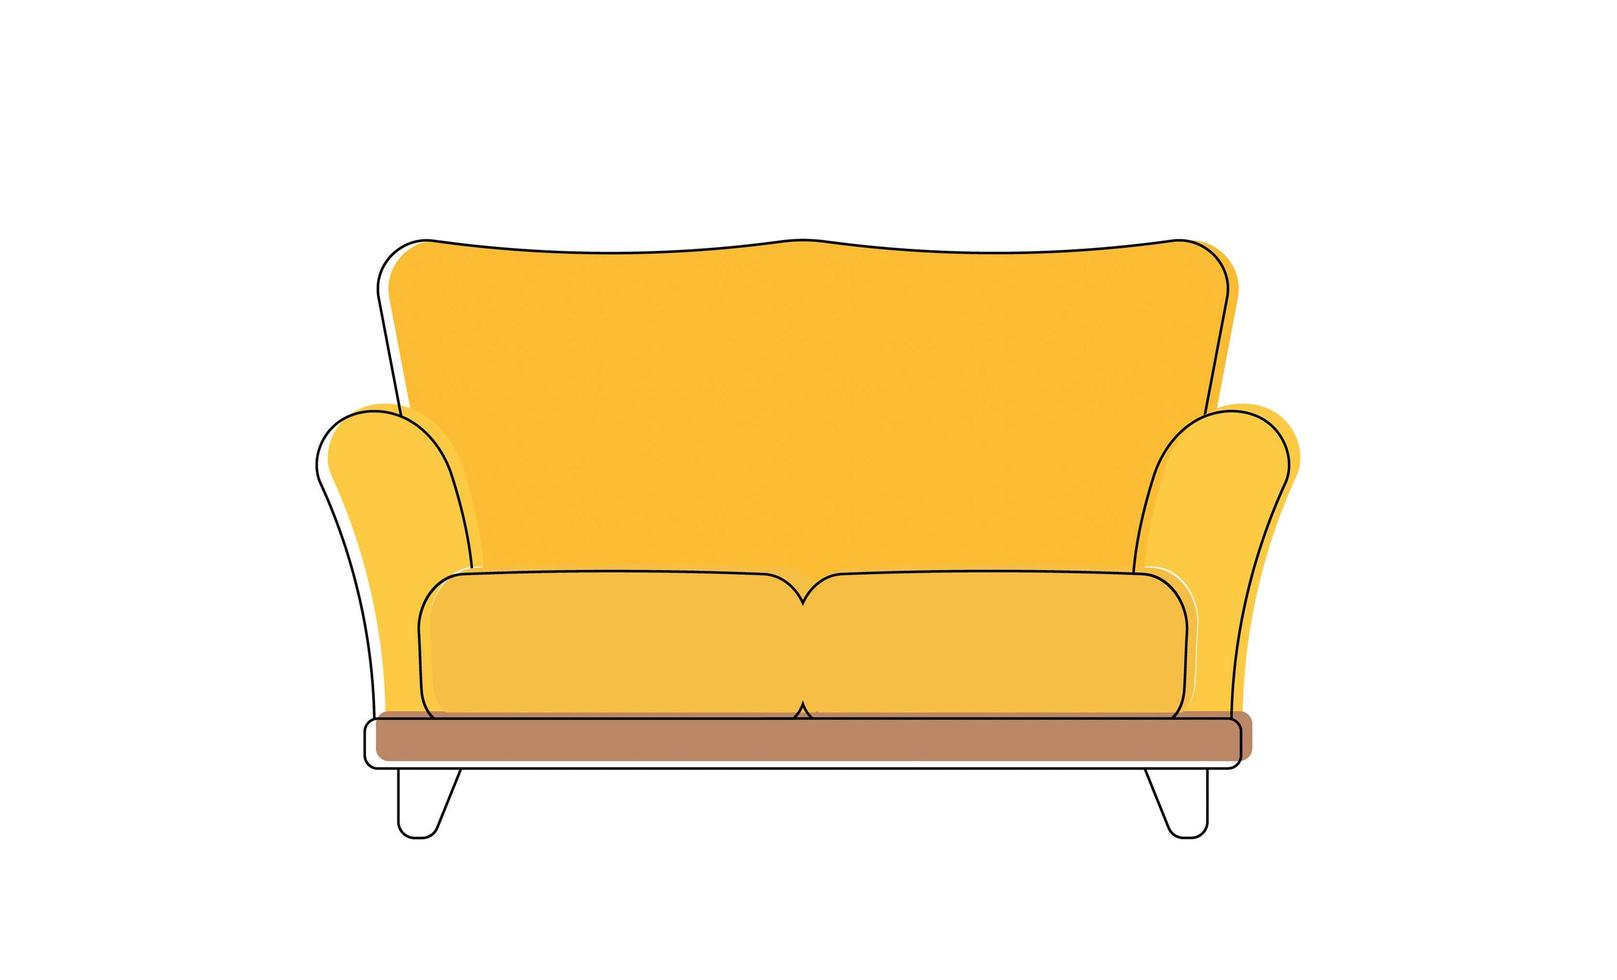 gul soffa i linjekonststil. ikonen isolerad på vit bakgrund. vektor. vektor